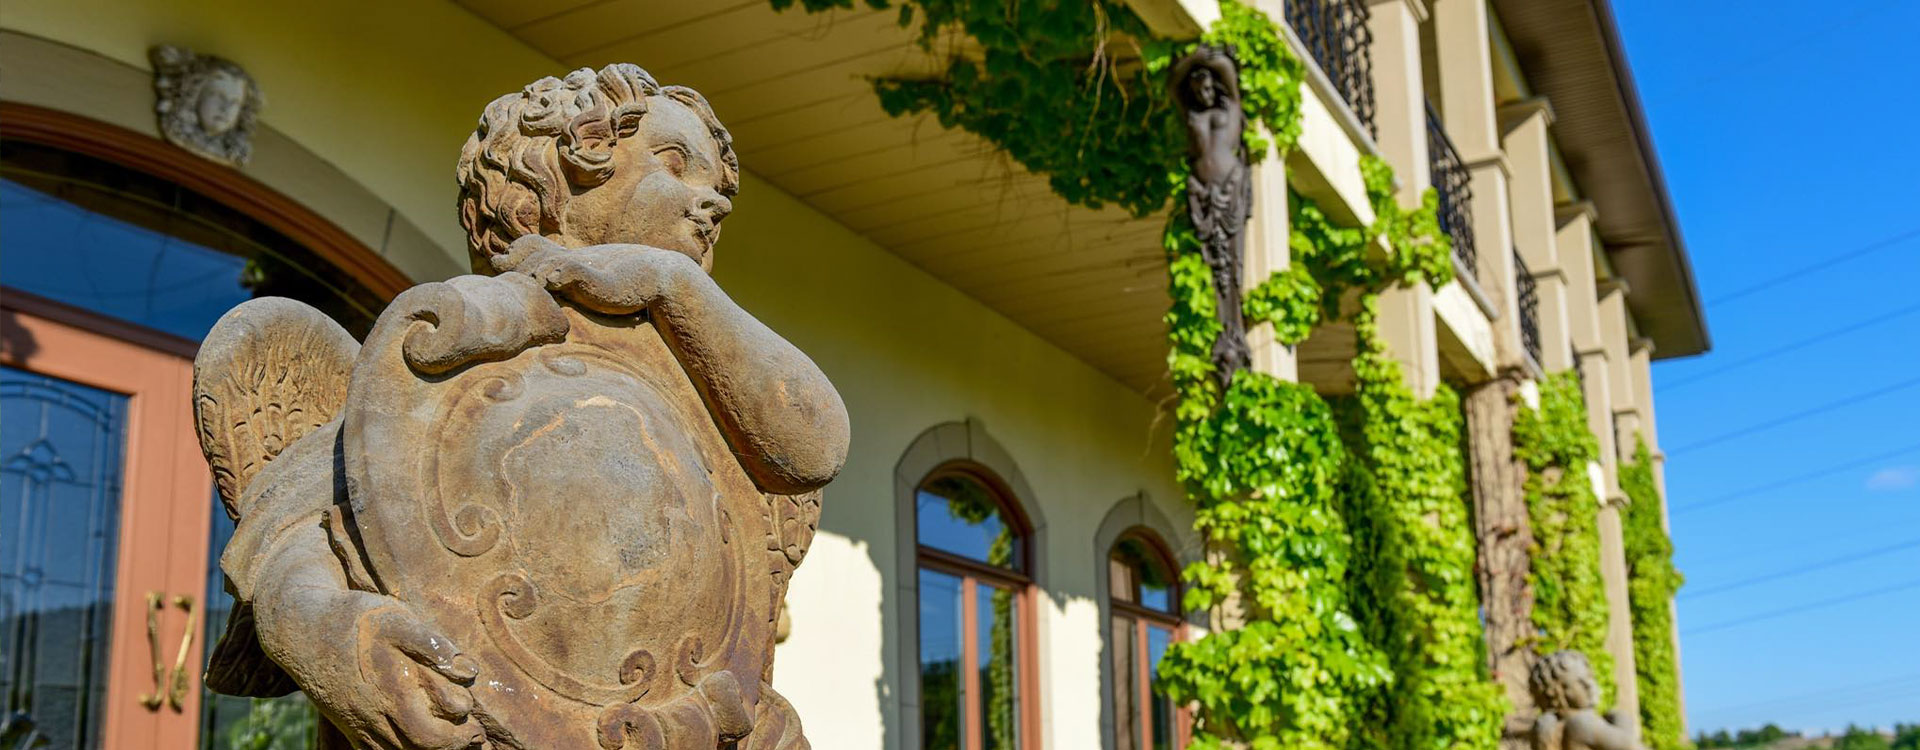 Vignoble Carpinteri - Statue d’ange à la Villa